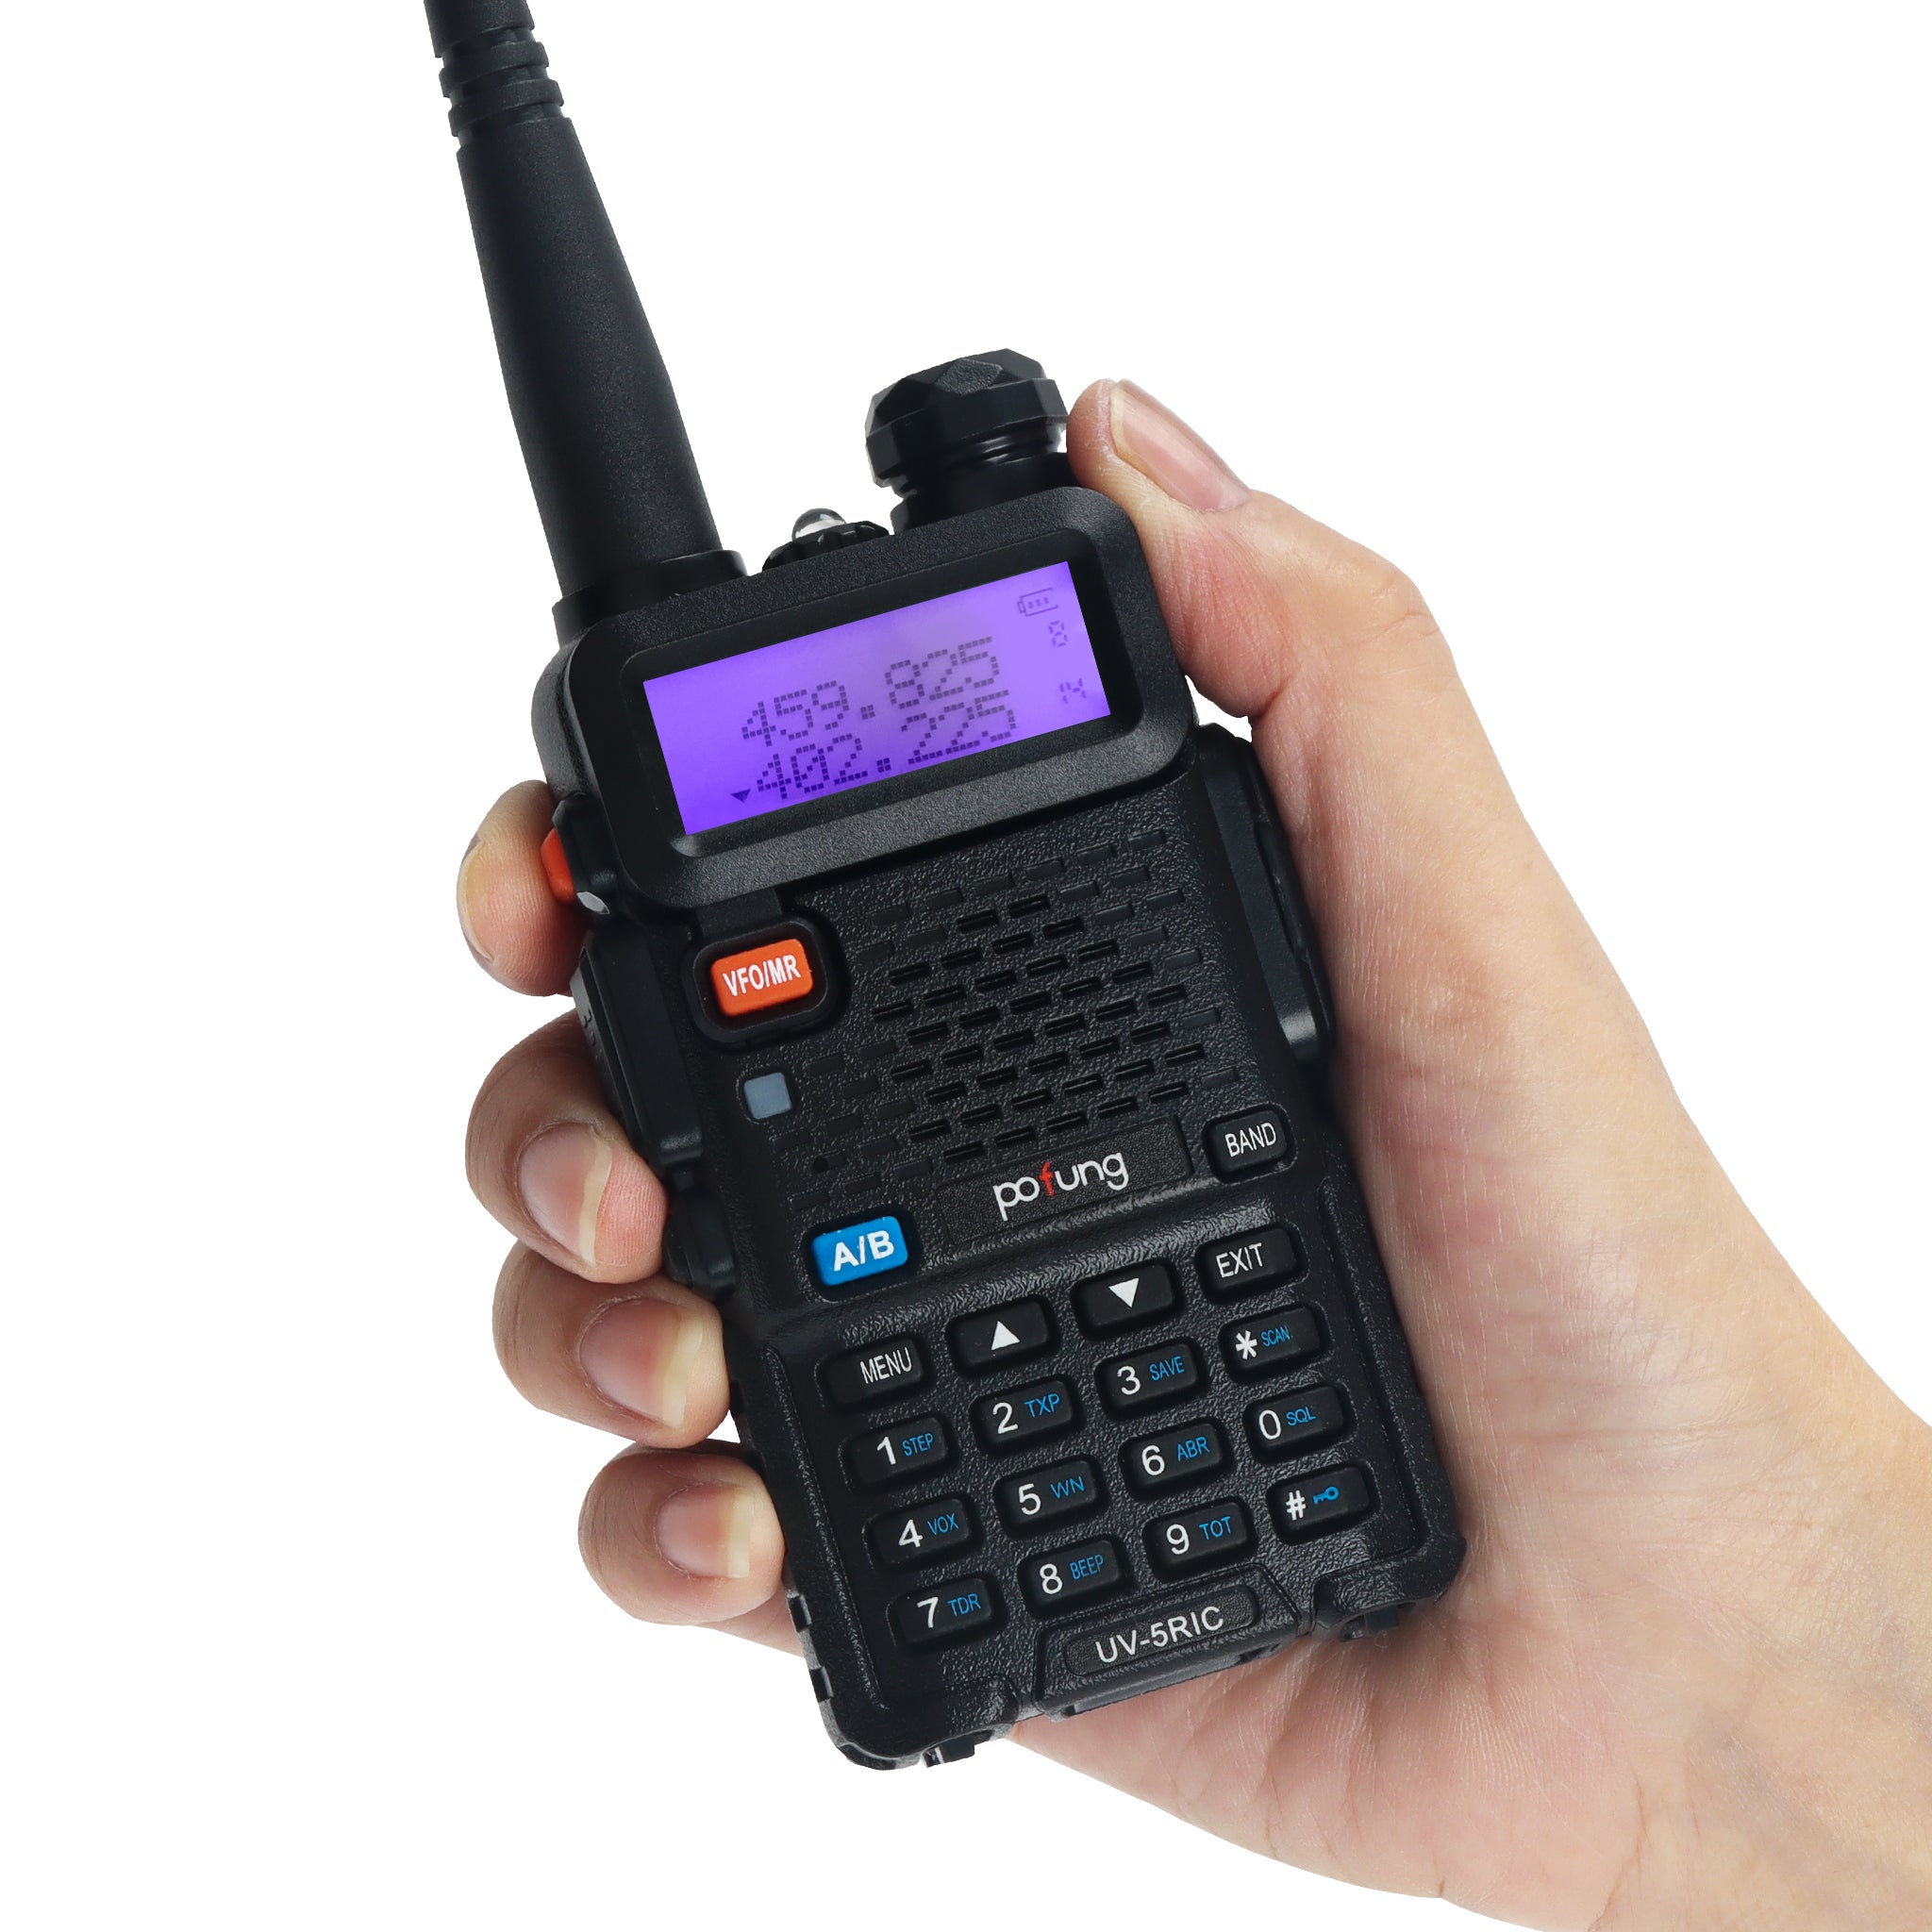  BaoFeng Radio UV-5R Ham Radio (6 Pack) 144-148Mhz/420